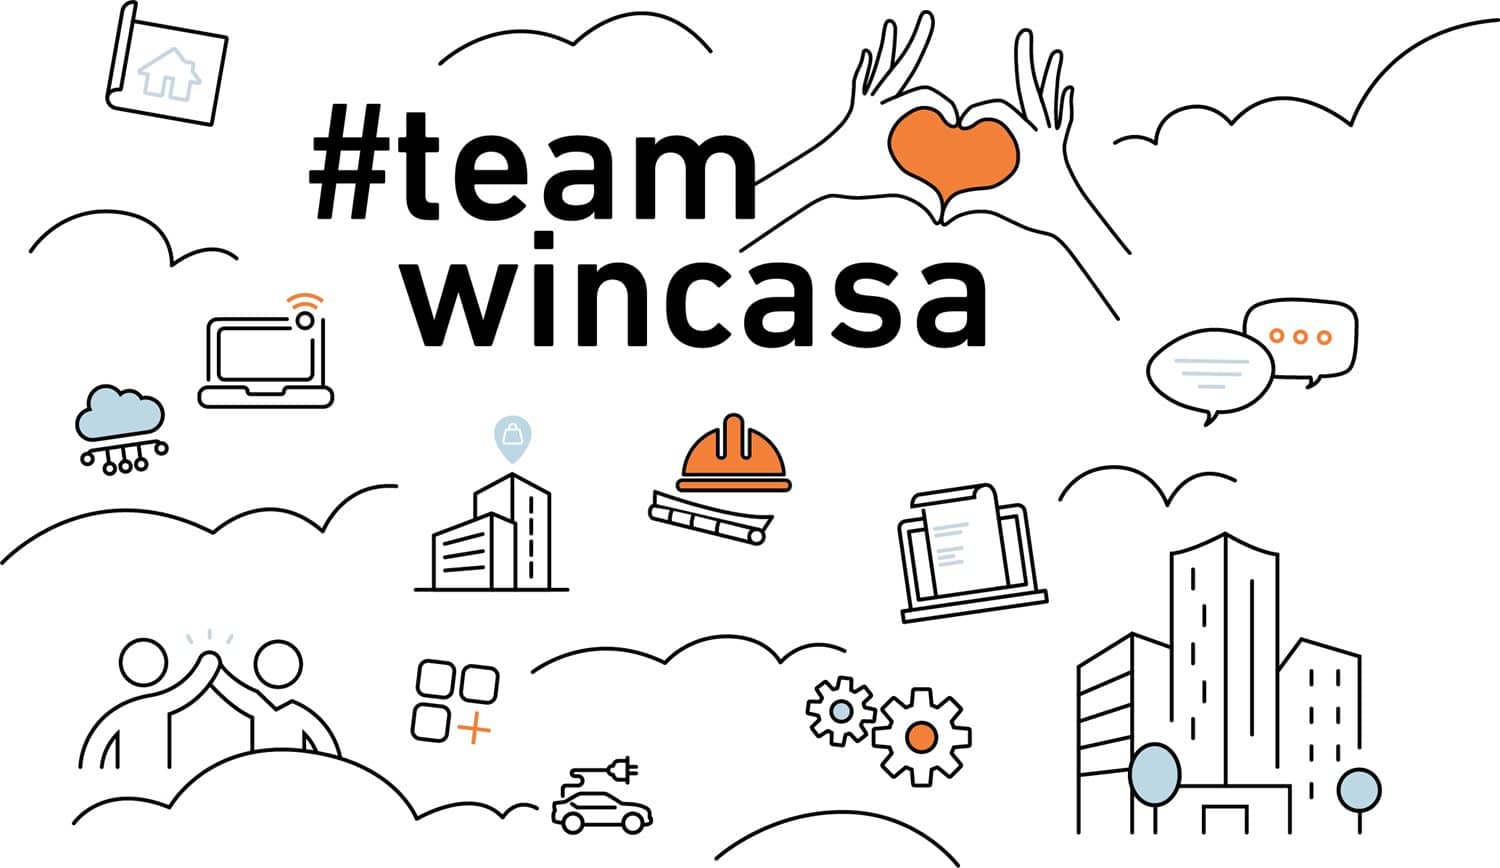 Become a part of #teamwincasa